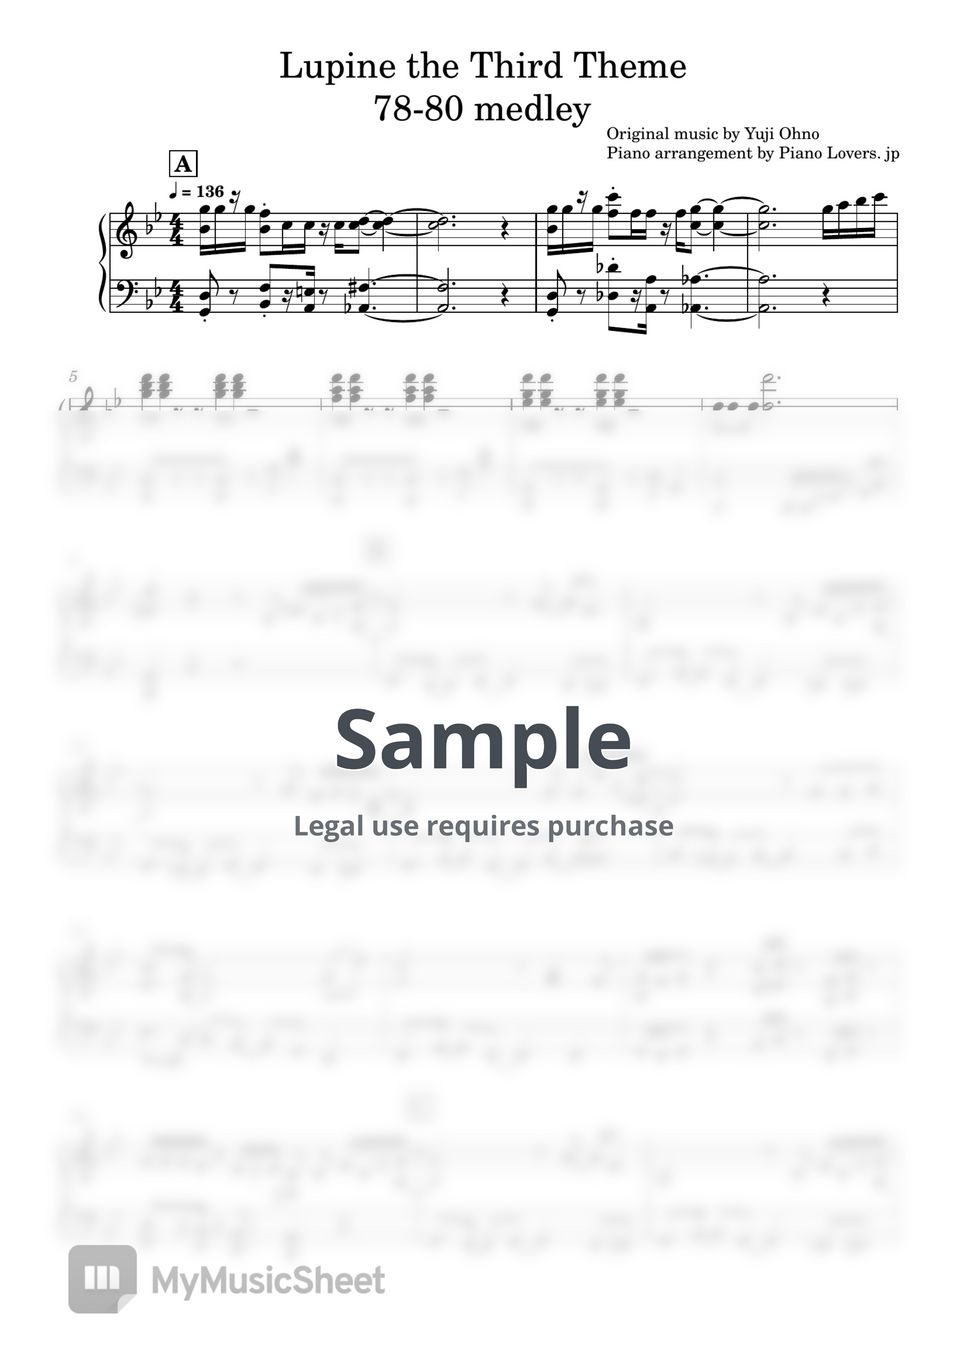 Yuji Ohno - Lupin the Third Medley(’78〜80) (Piano Sheet Music / Intermediate) by Piano Lovers. jp